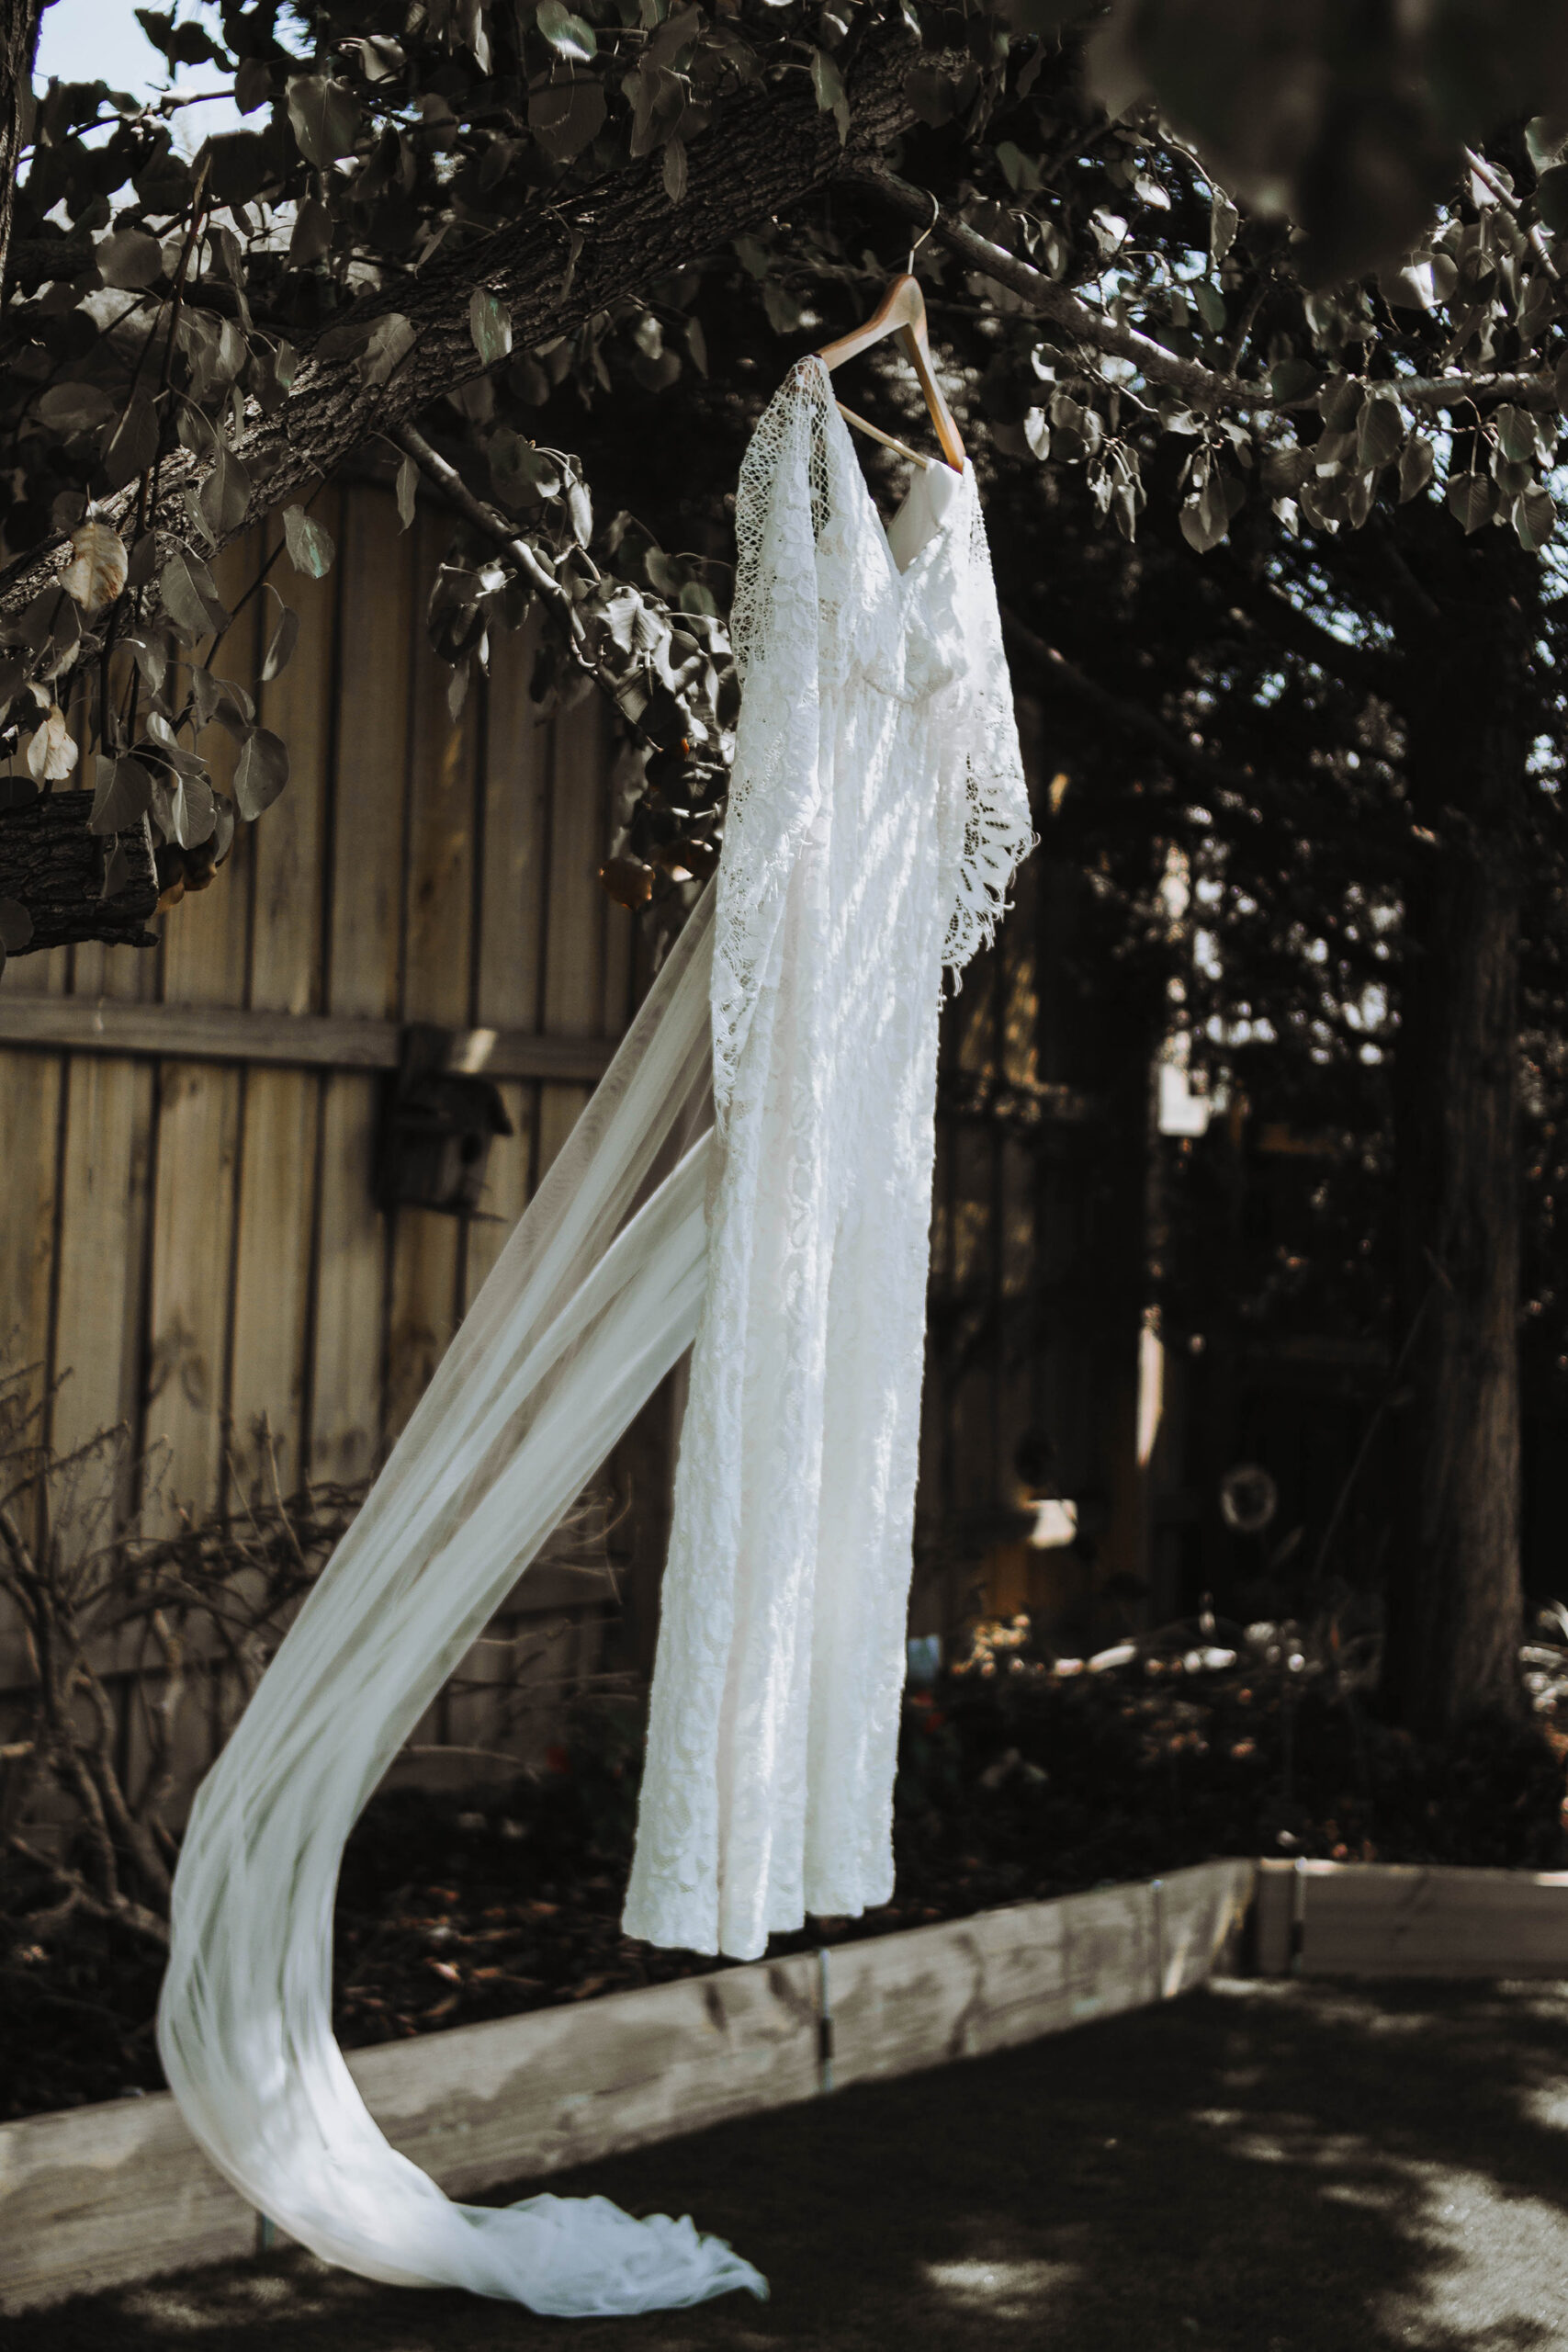 Jenna Mali Rustic Wedding Little Chief Photography SBS 004 scaled